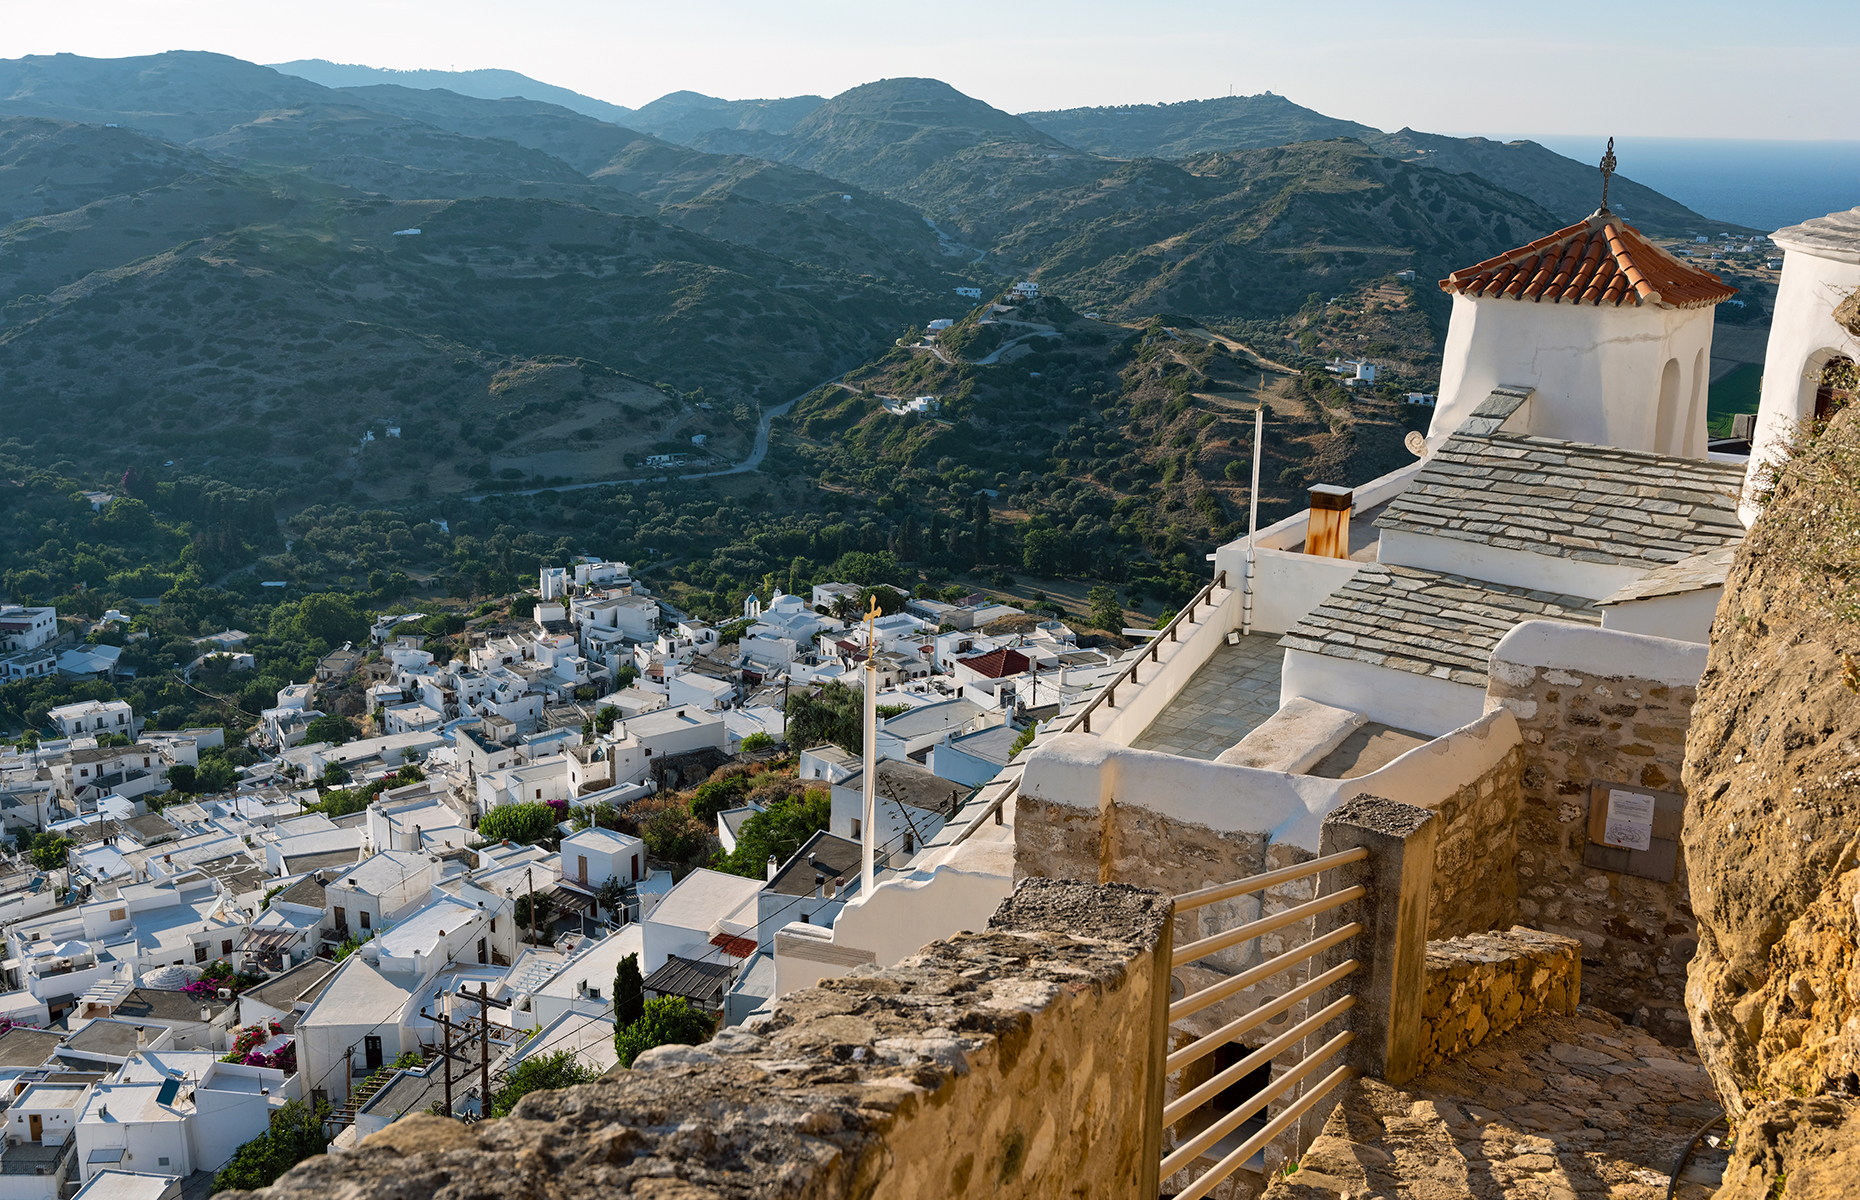 Skyros, Greece. (Image: dinosmichail/Shutterstock)